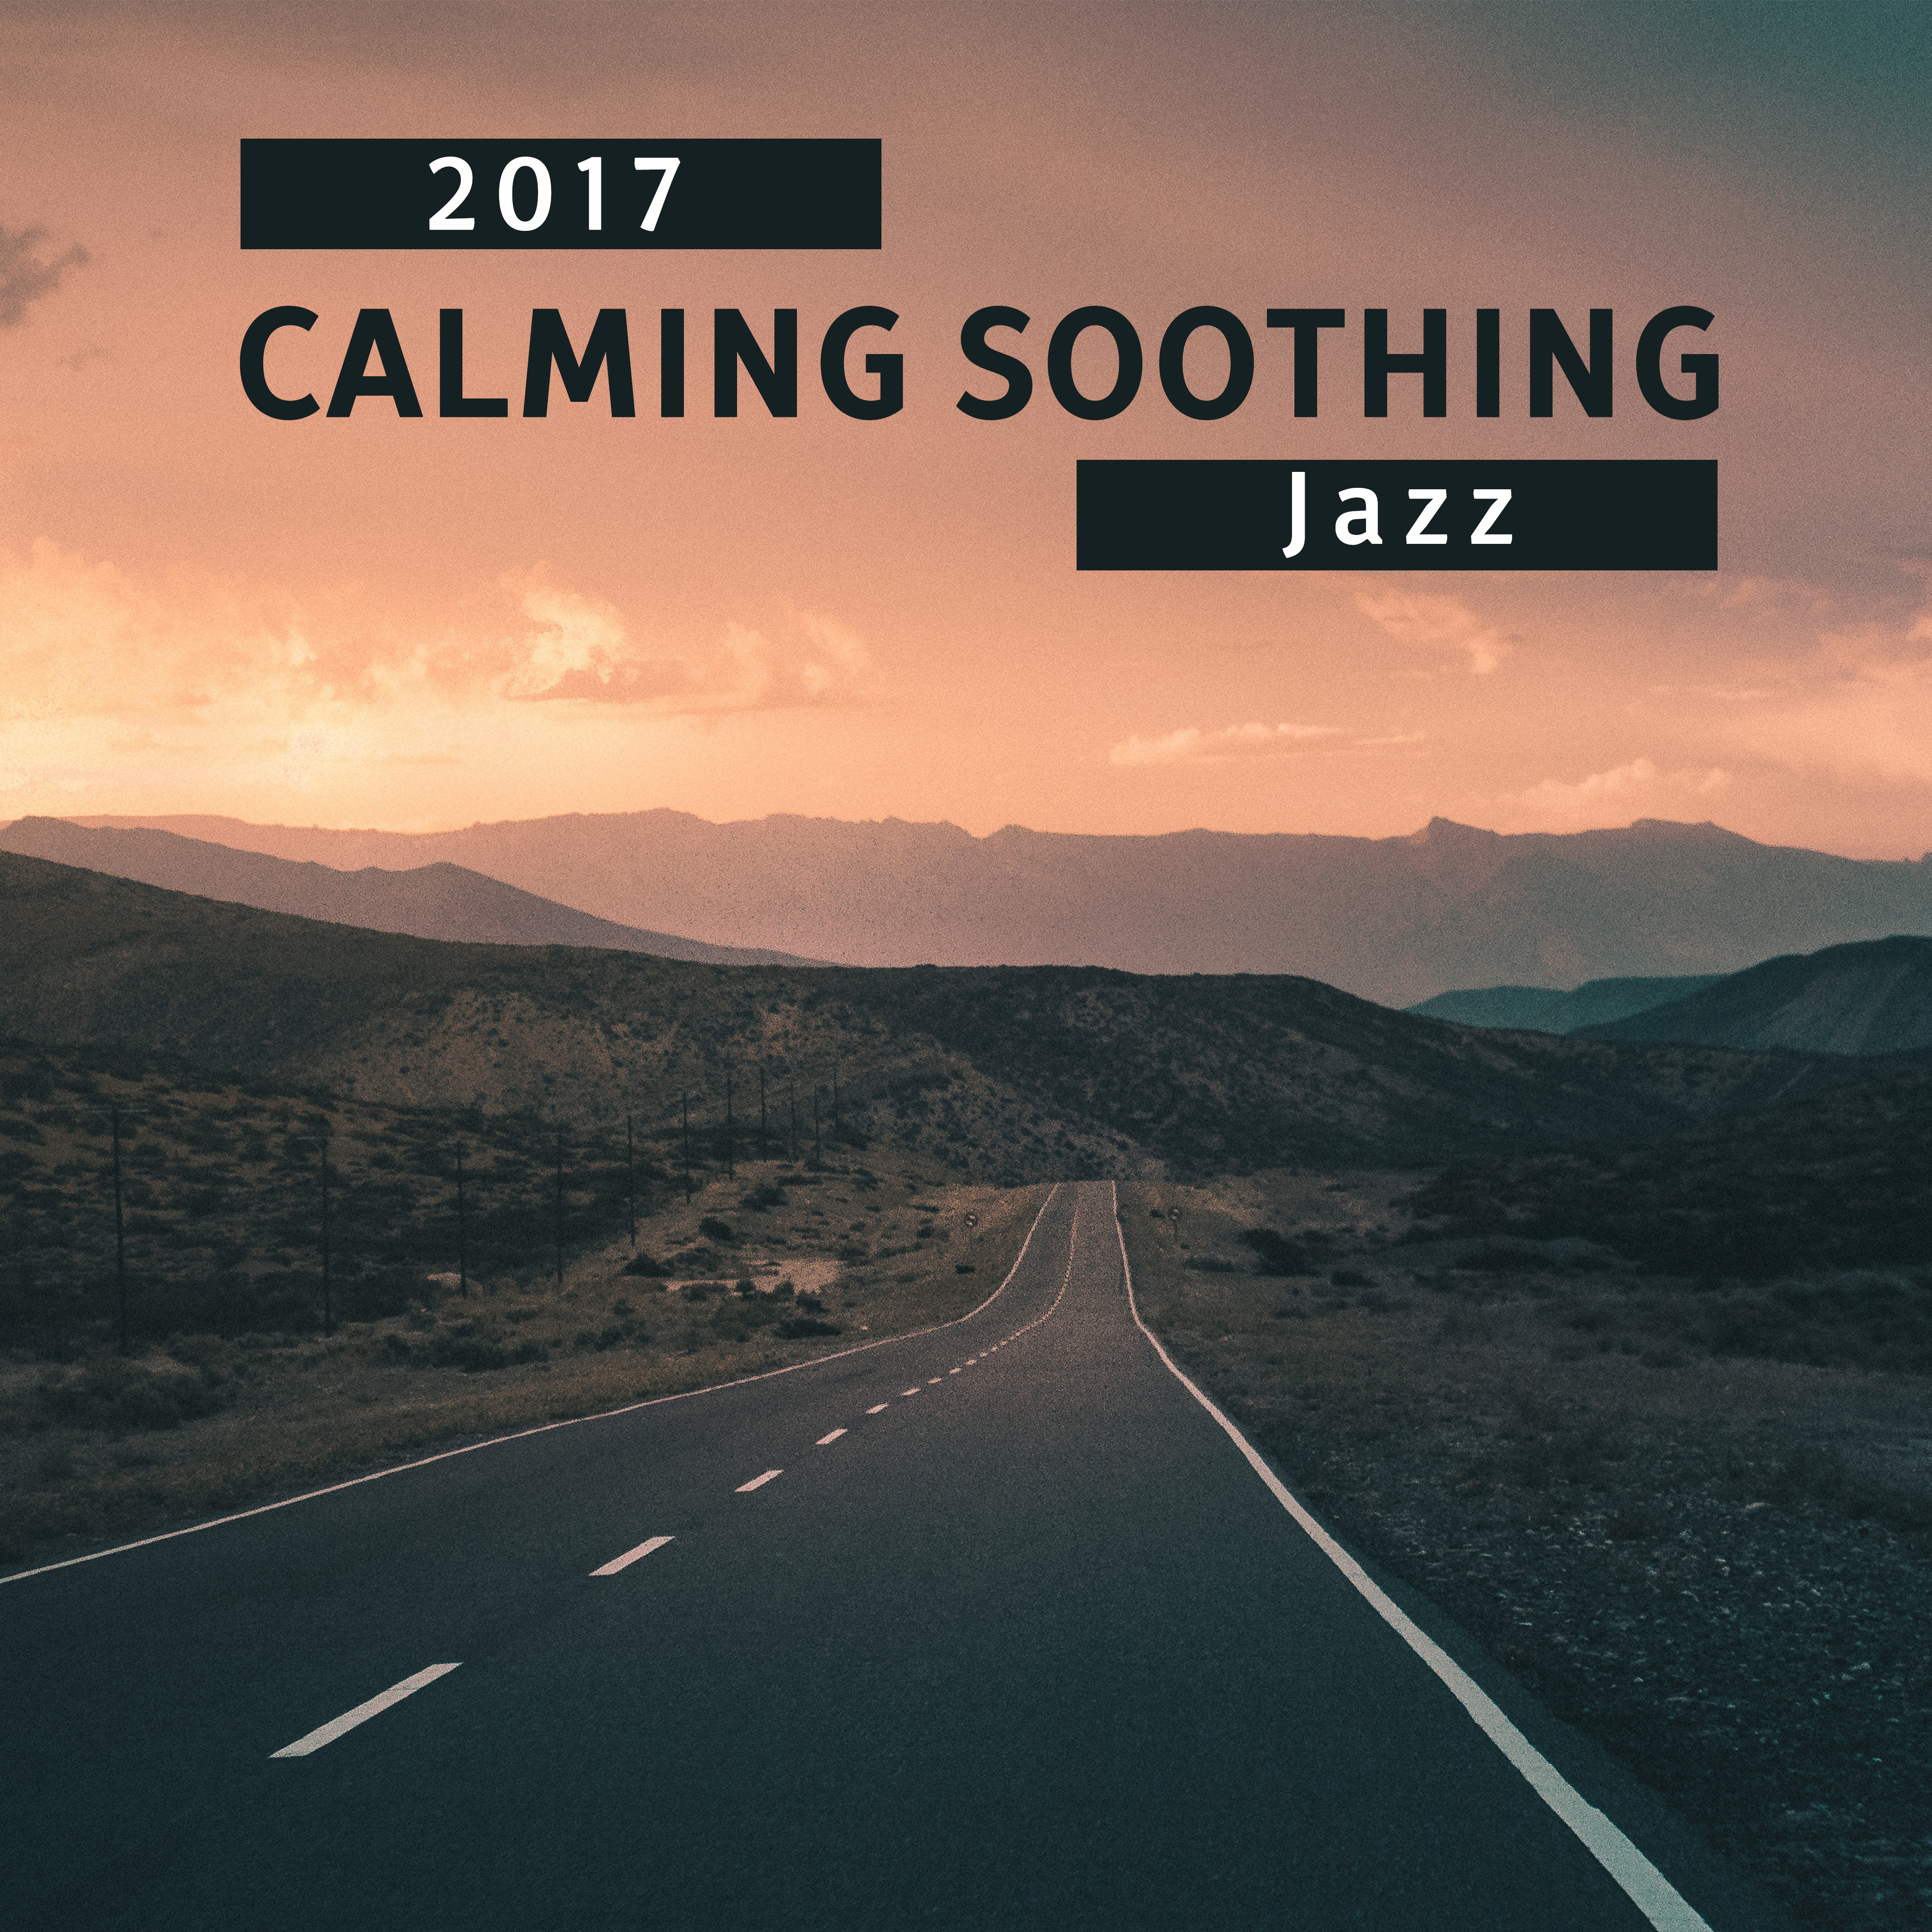 2017 Calming Soothing Jazz